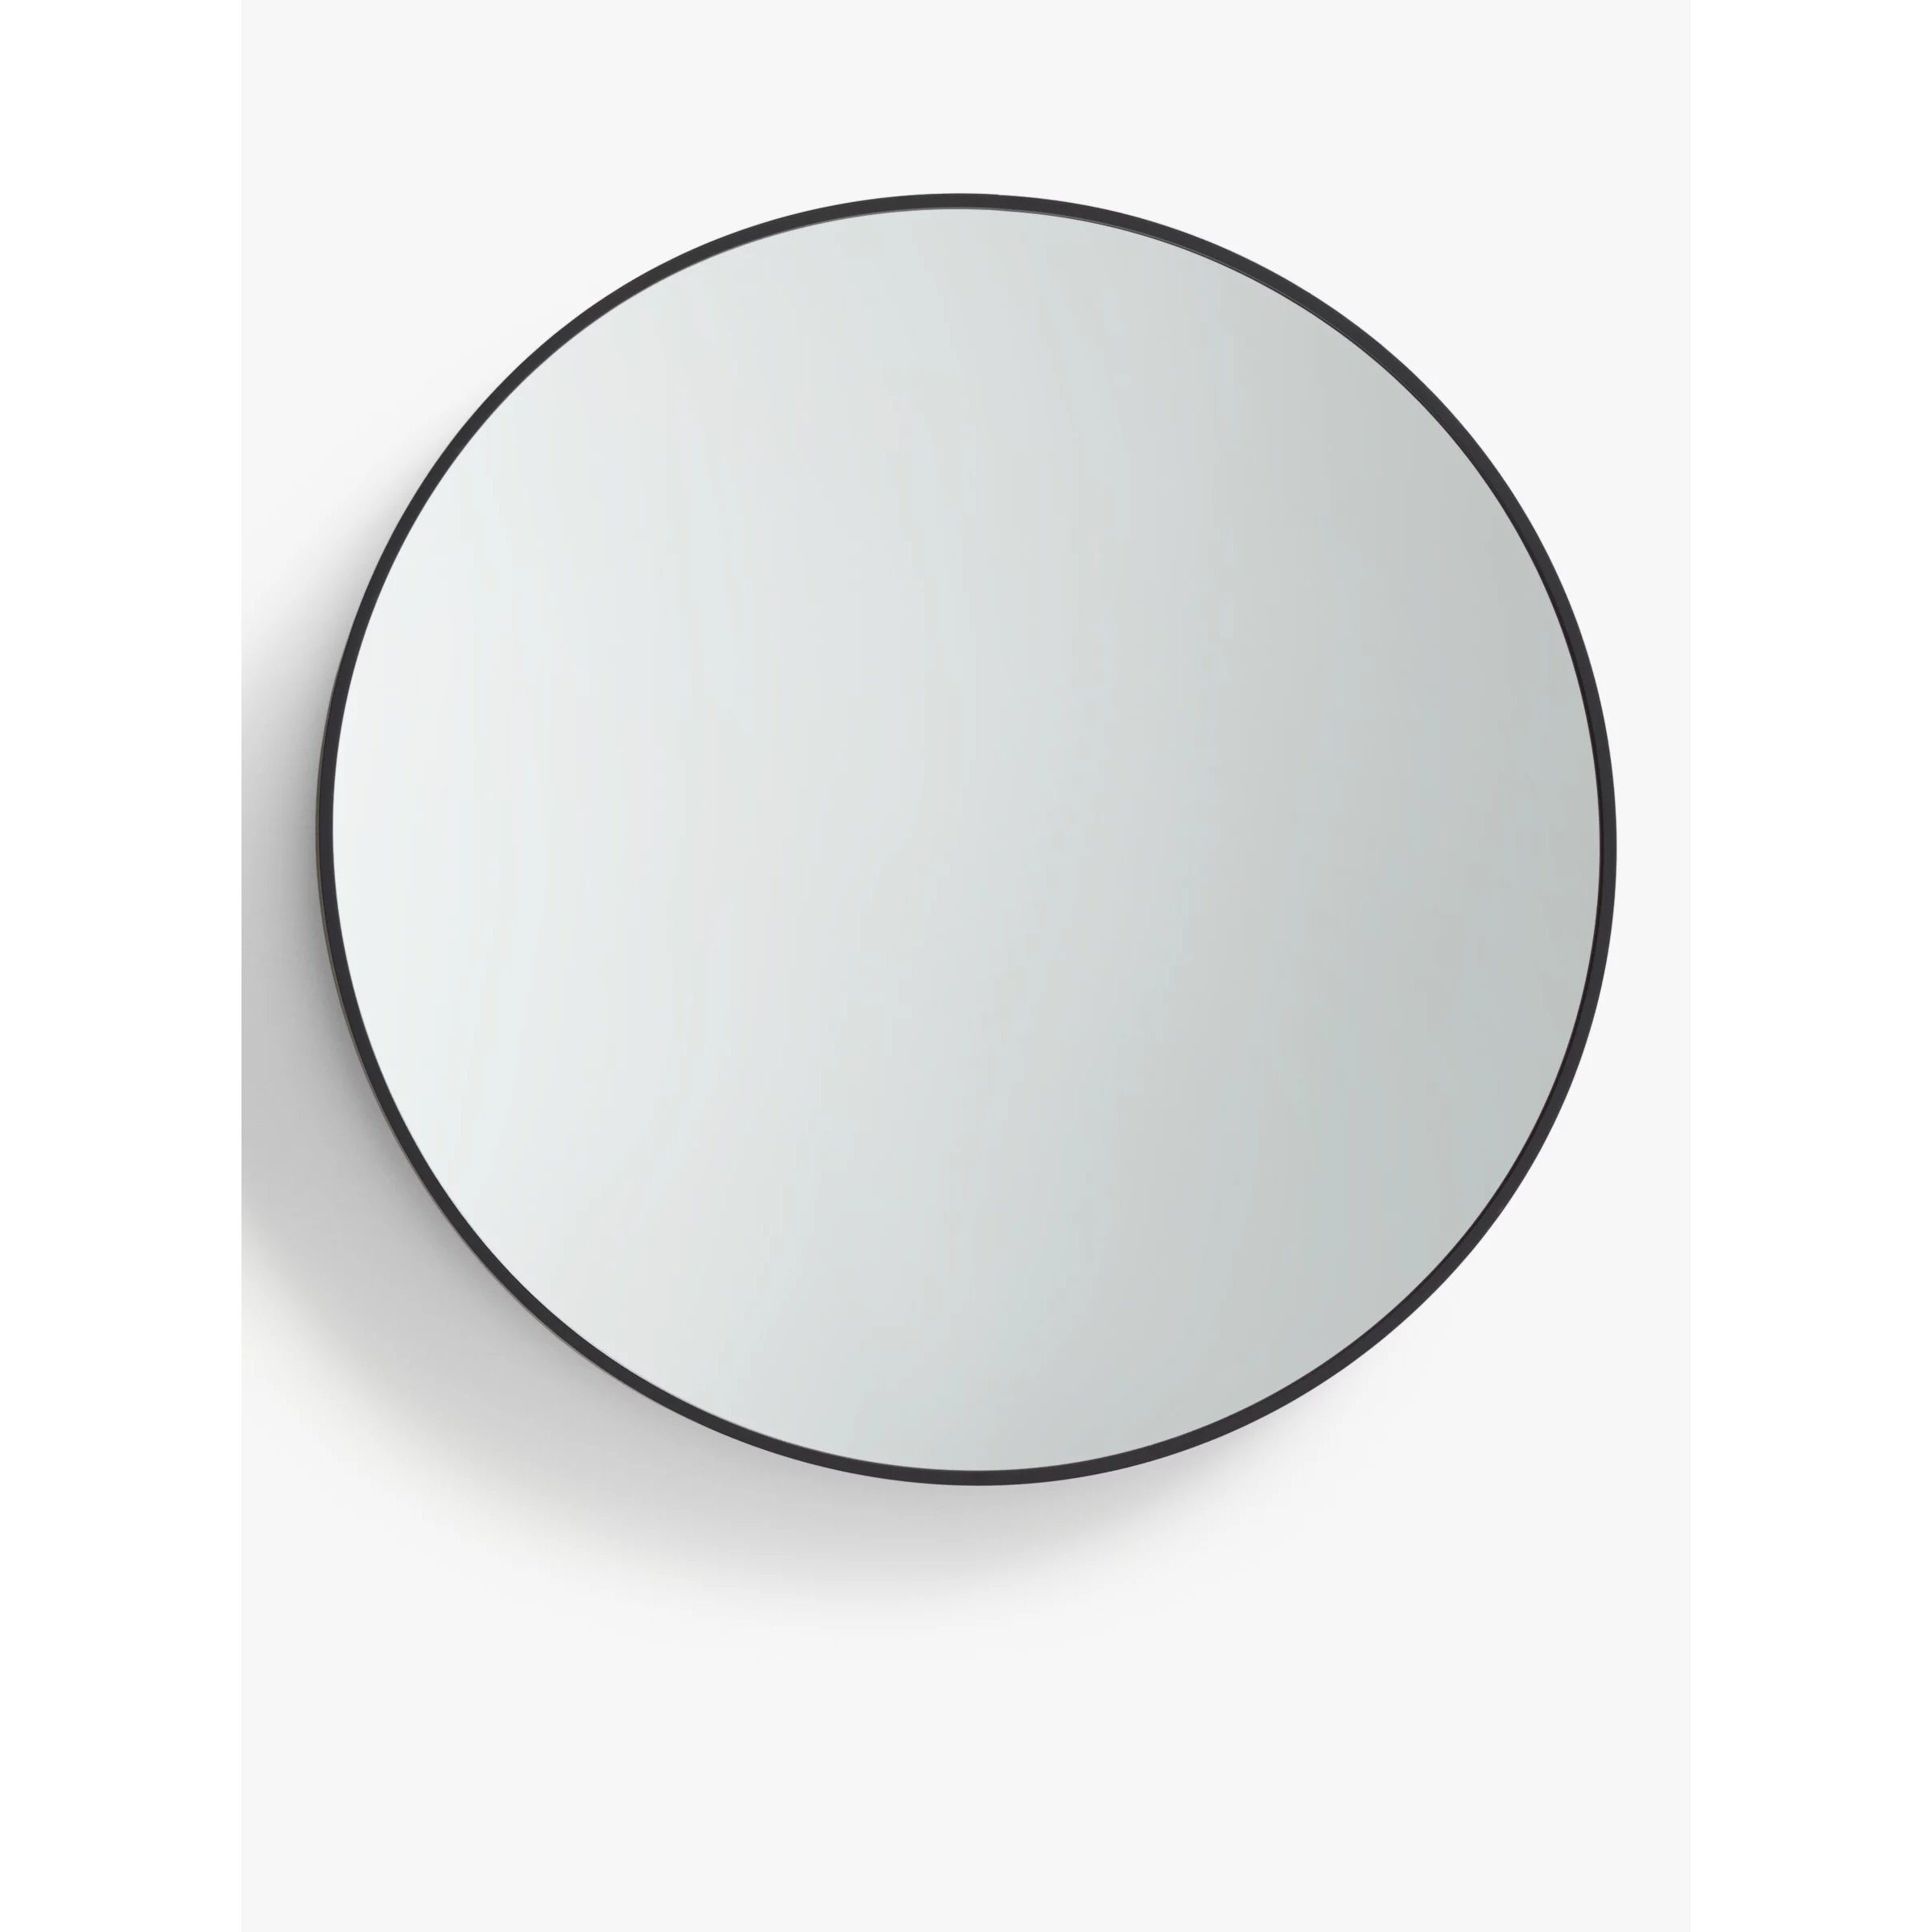 John Lewis ANYDAY Thin Metal Frame Round Wall Mirror, 65cm, Black